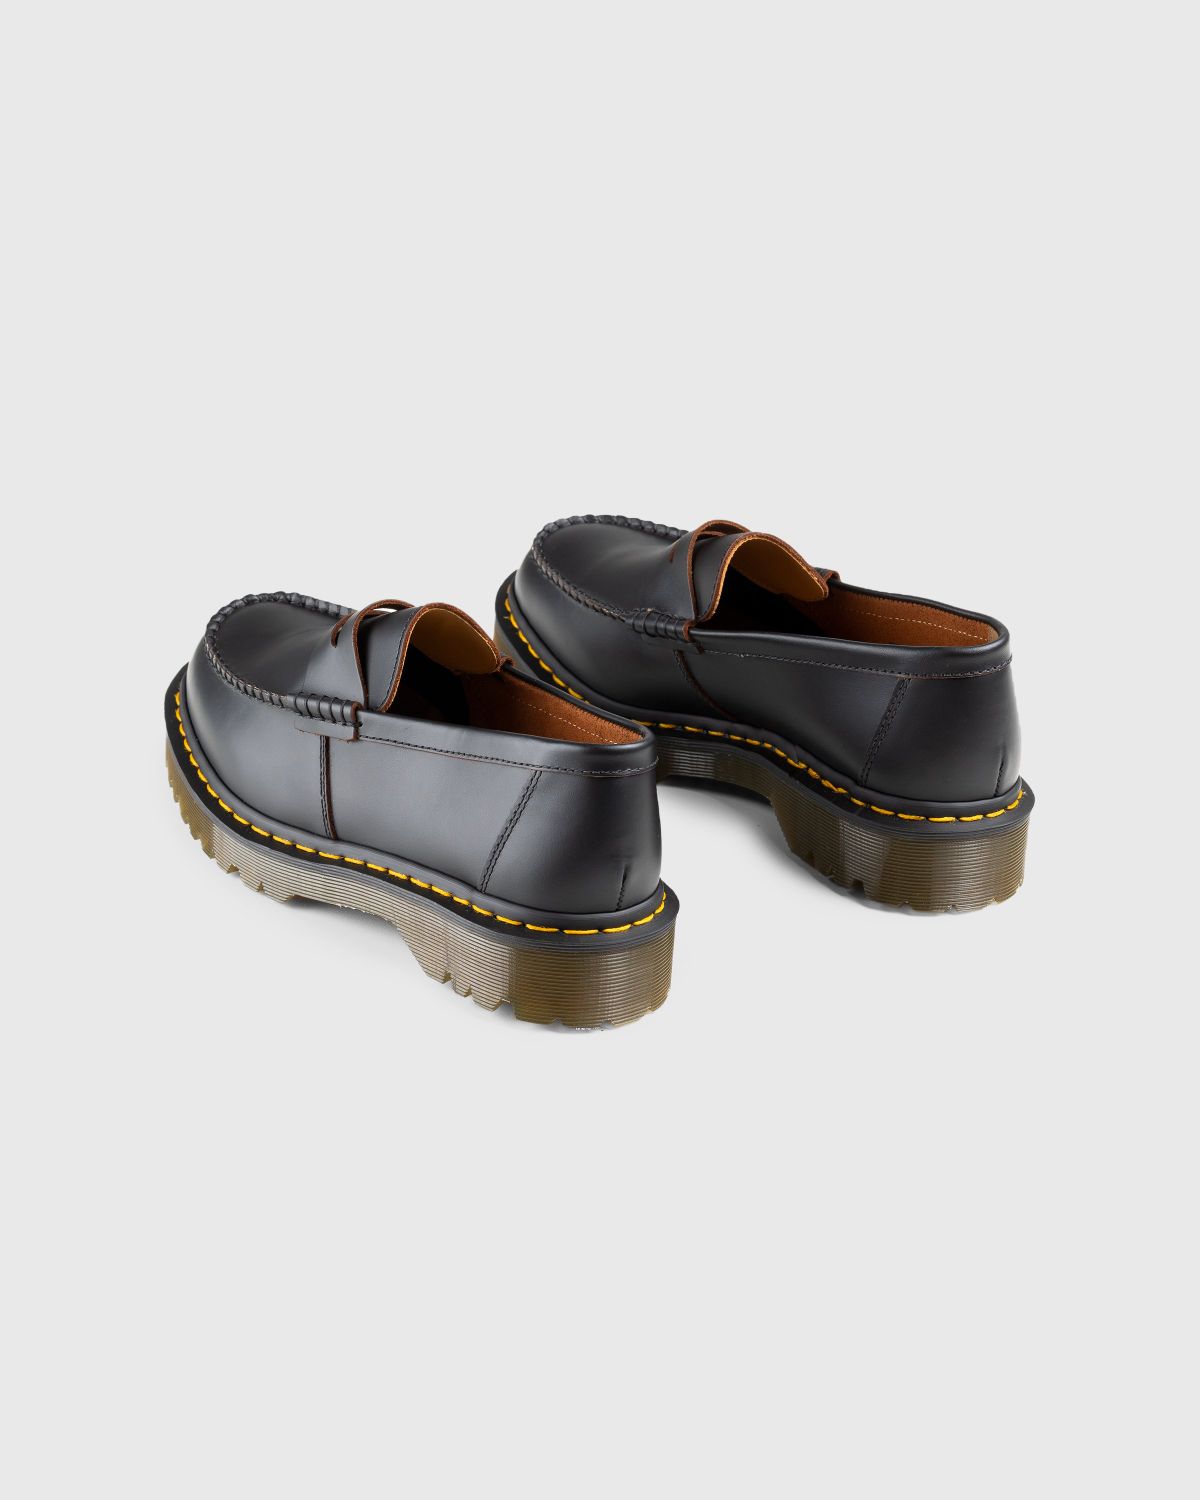 Dr. Martens – Penton Bex Quilon Leather Loafers Black - Loafers - Black - Image 4